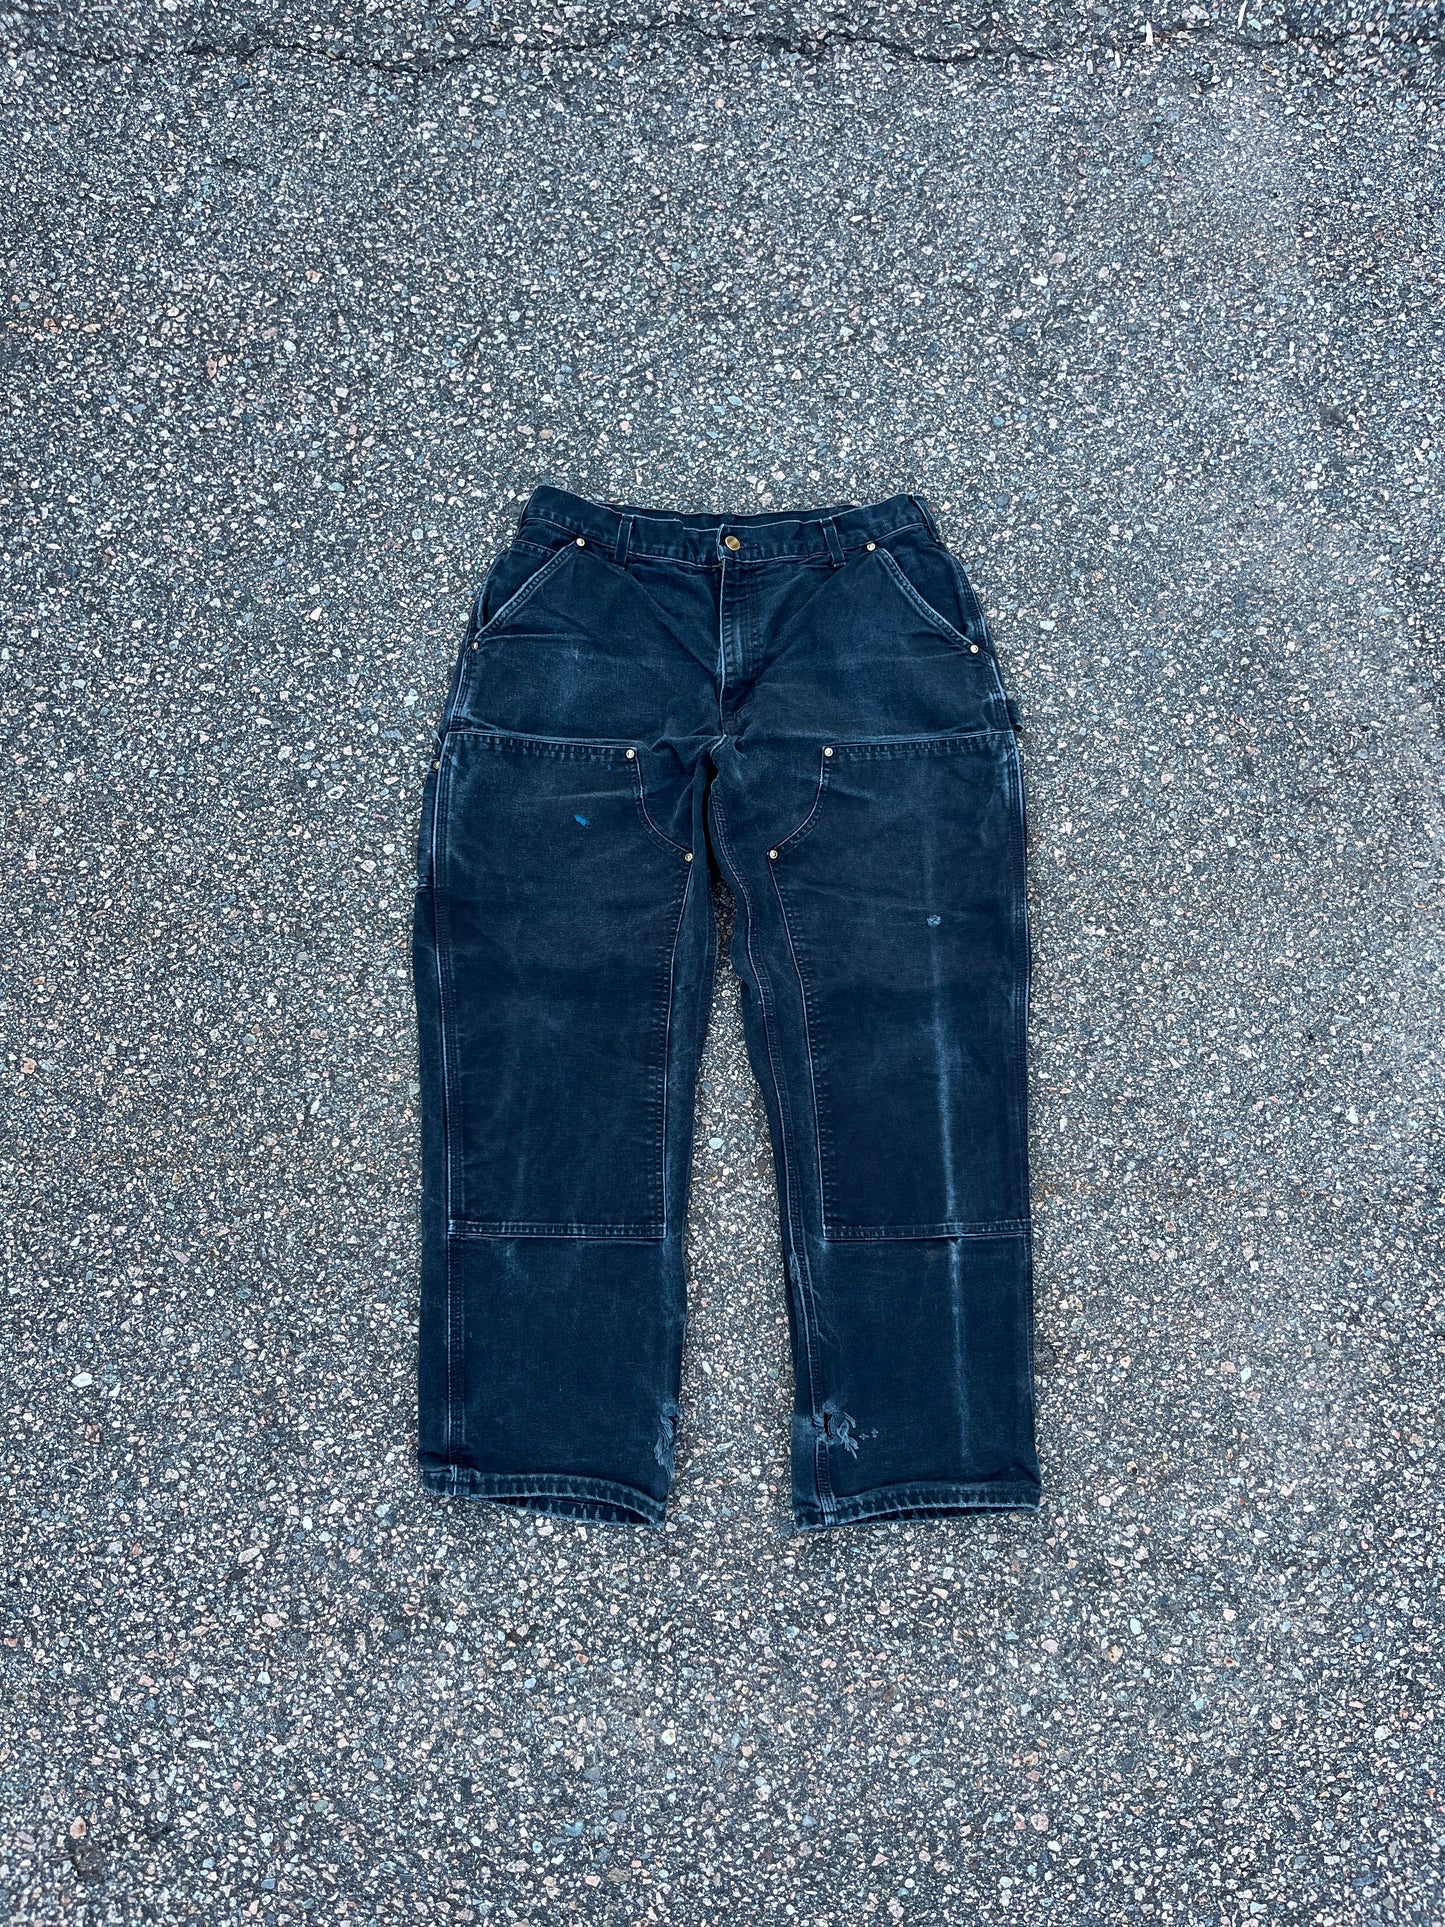 Faded Black Carhartt Double Knee Pants - 32 x 28.5